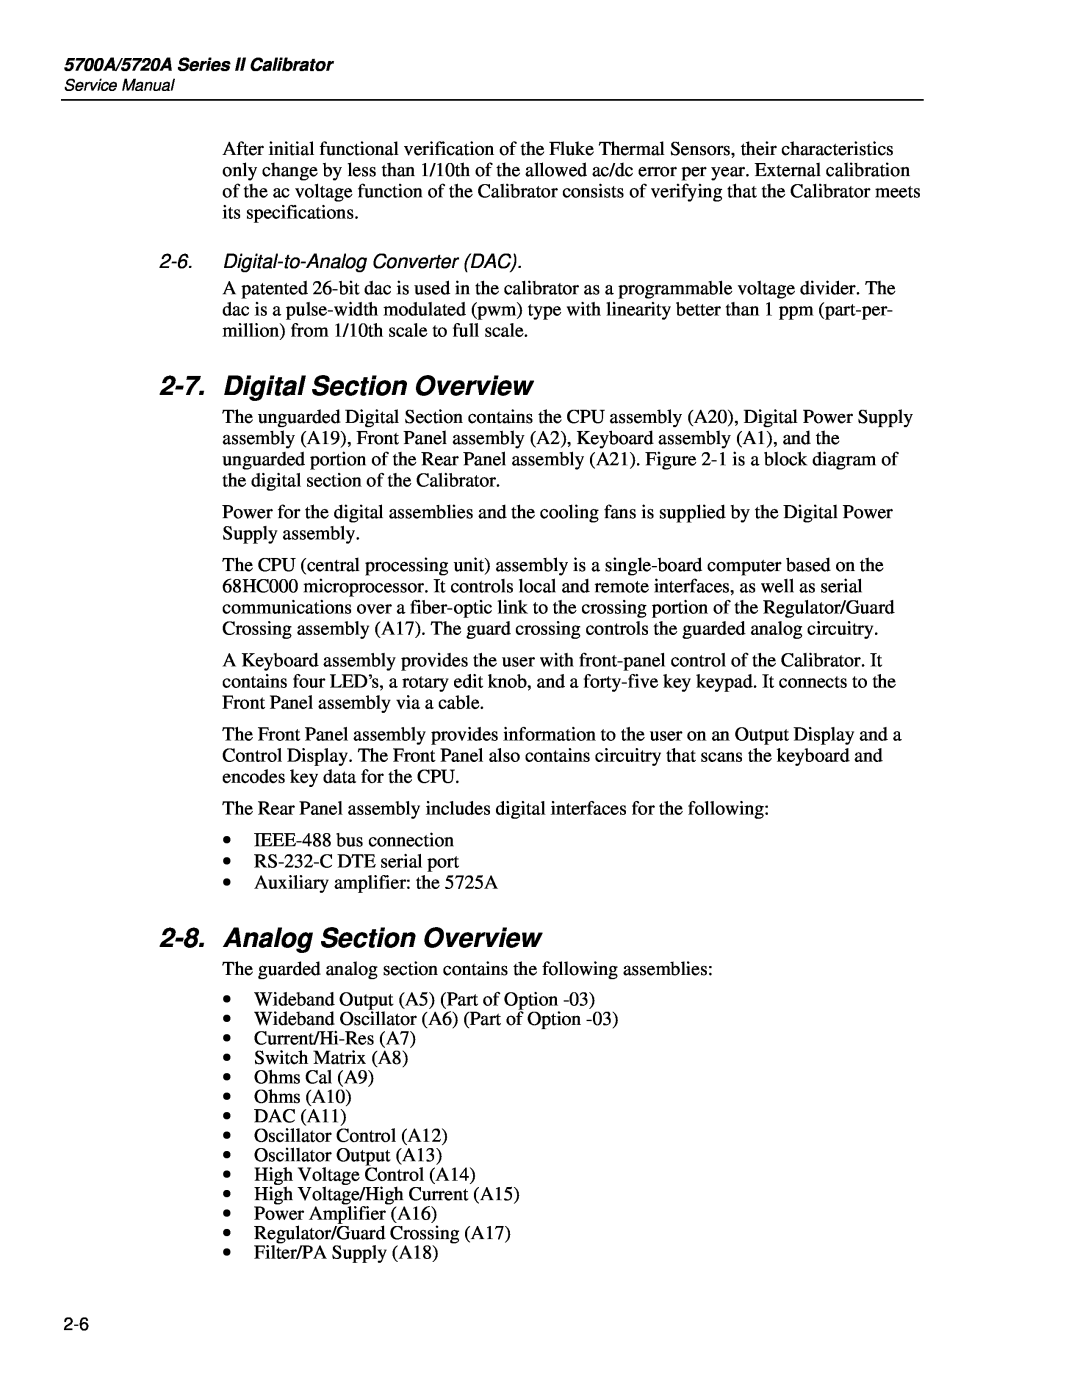 Fluke 5720A service manual Digital Section Overview, Analog Section Overview, Digital-to-Analog Converter DAC 